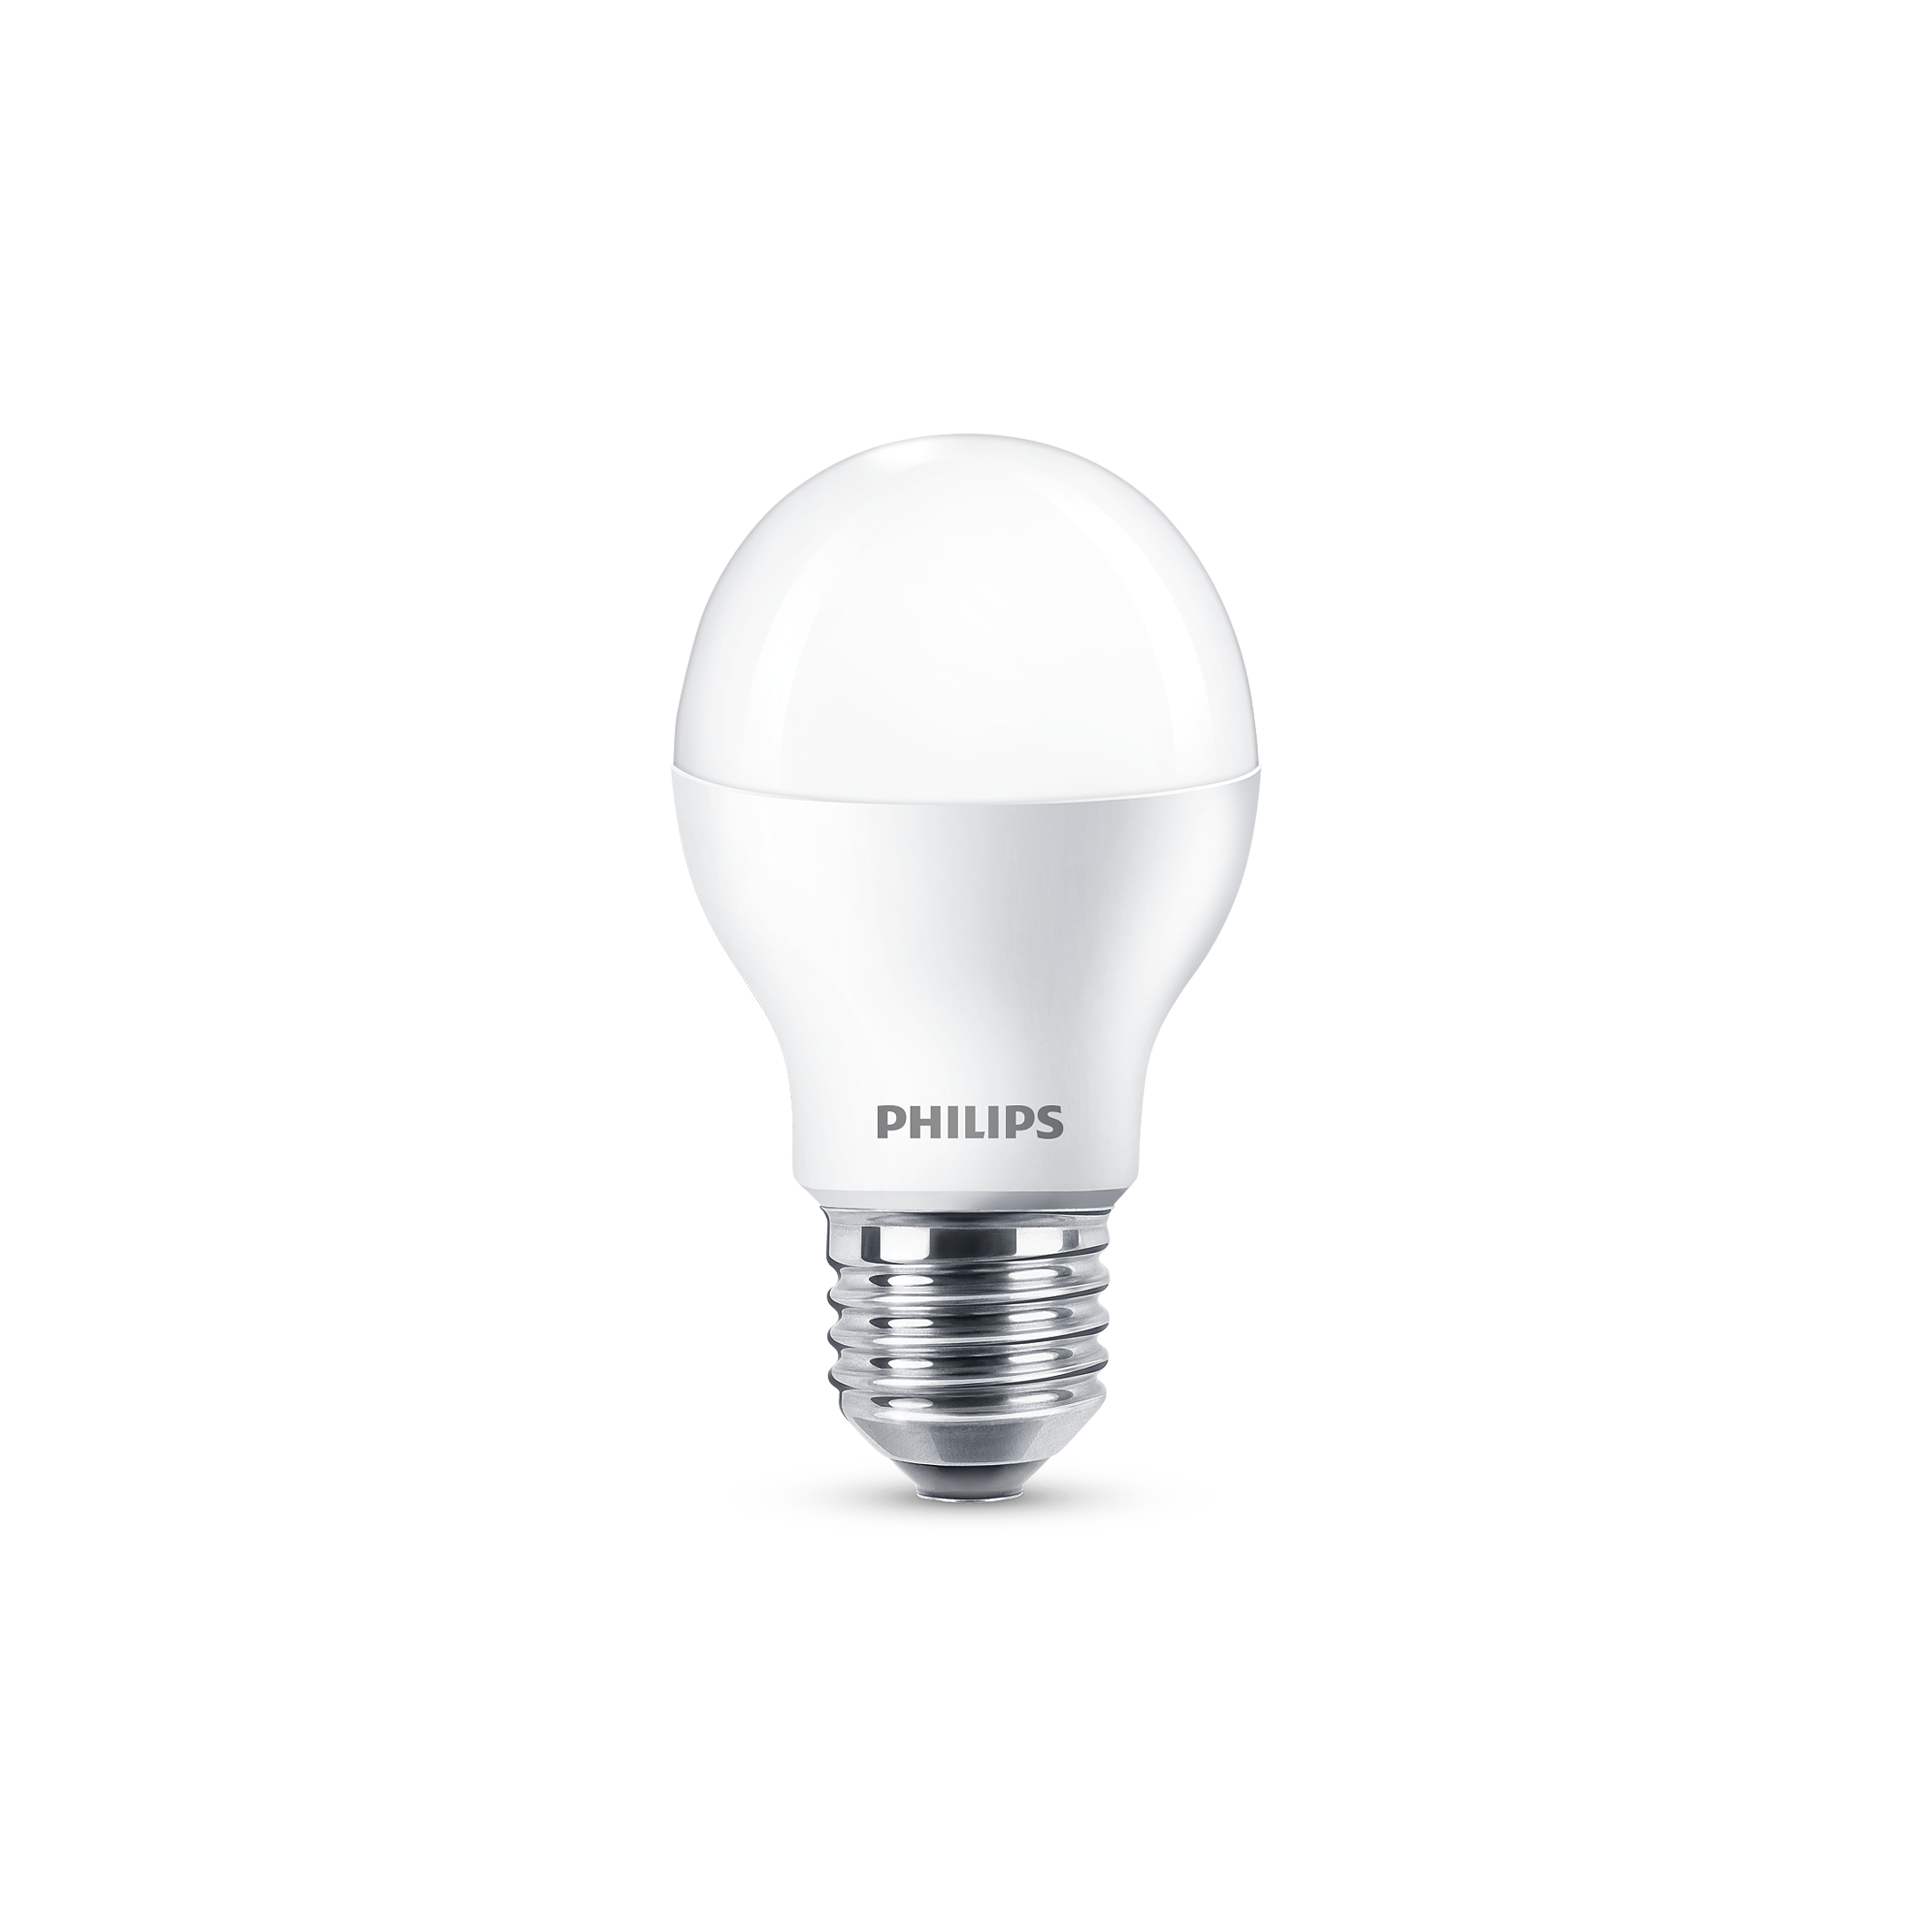 10 x e27 Lamp LED Bulb Lamp Light Bulb 7 Watt Energy Saving Cold White 